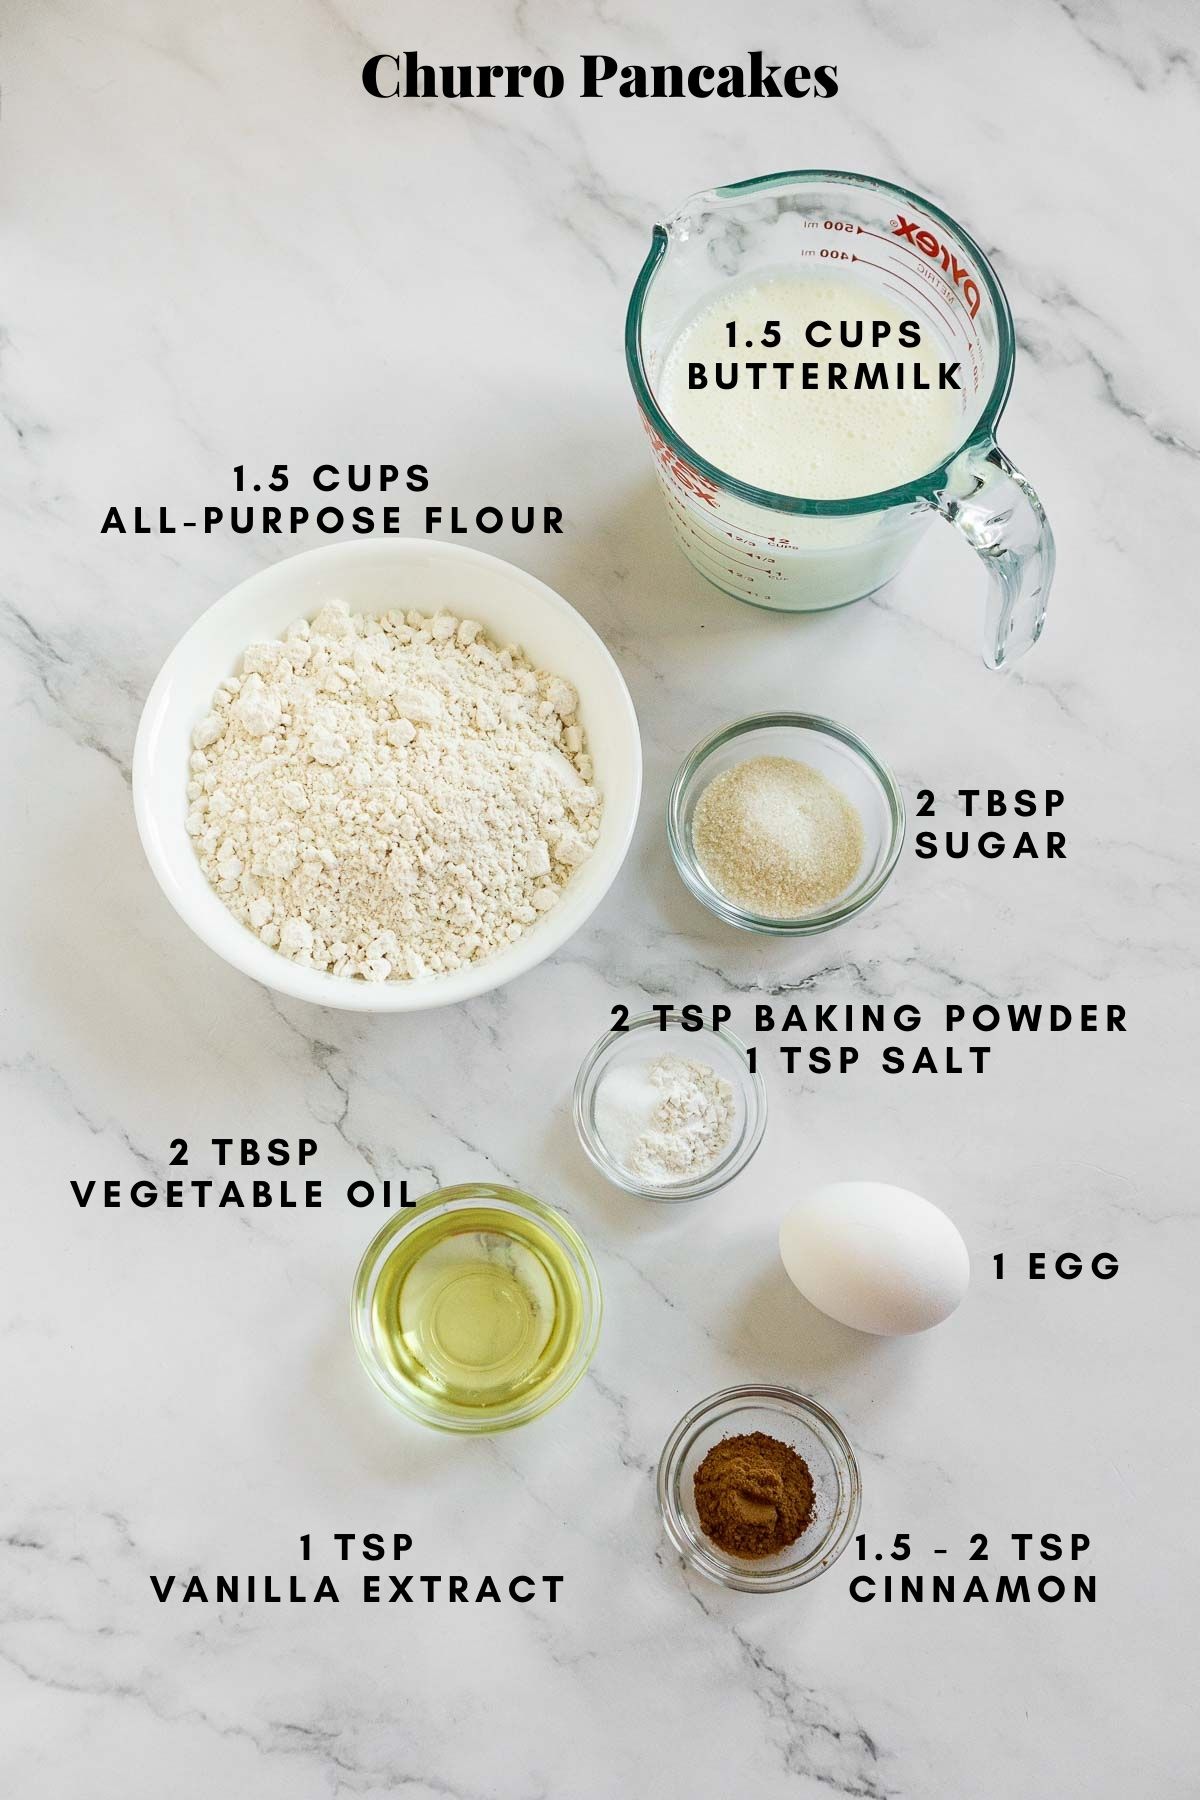 Ingredients for churro pancakes